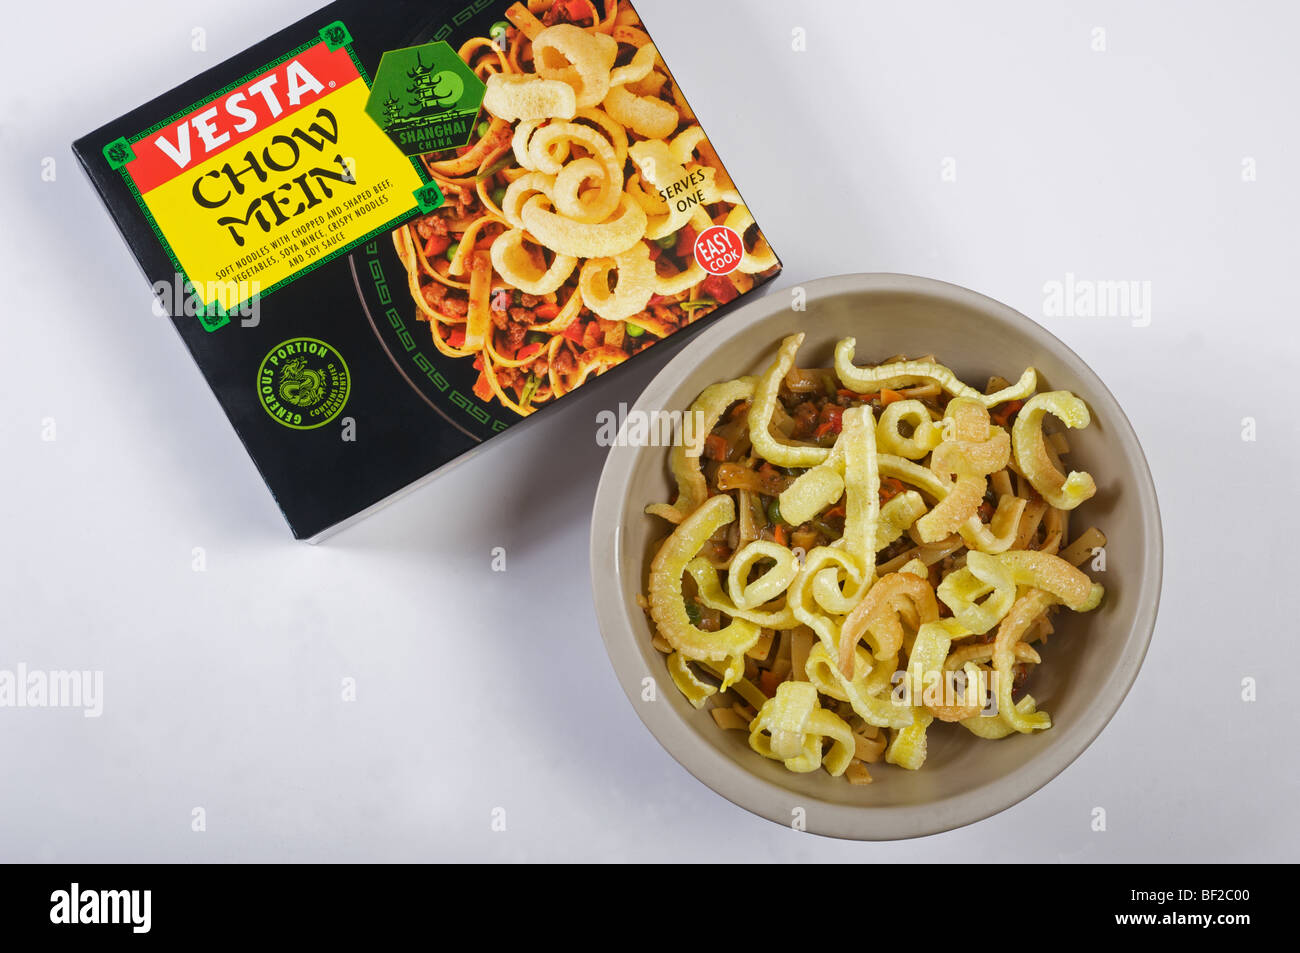 Vesta chow mein ready meal Stock Photo - Alamy